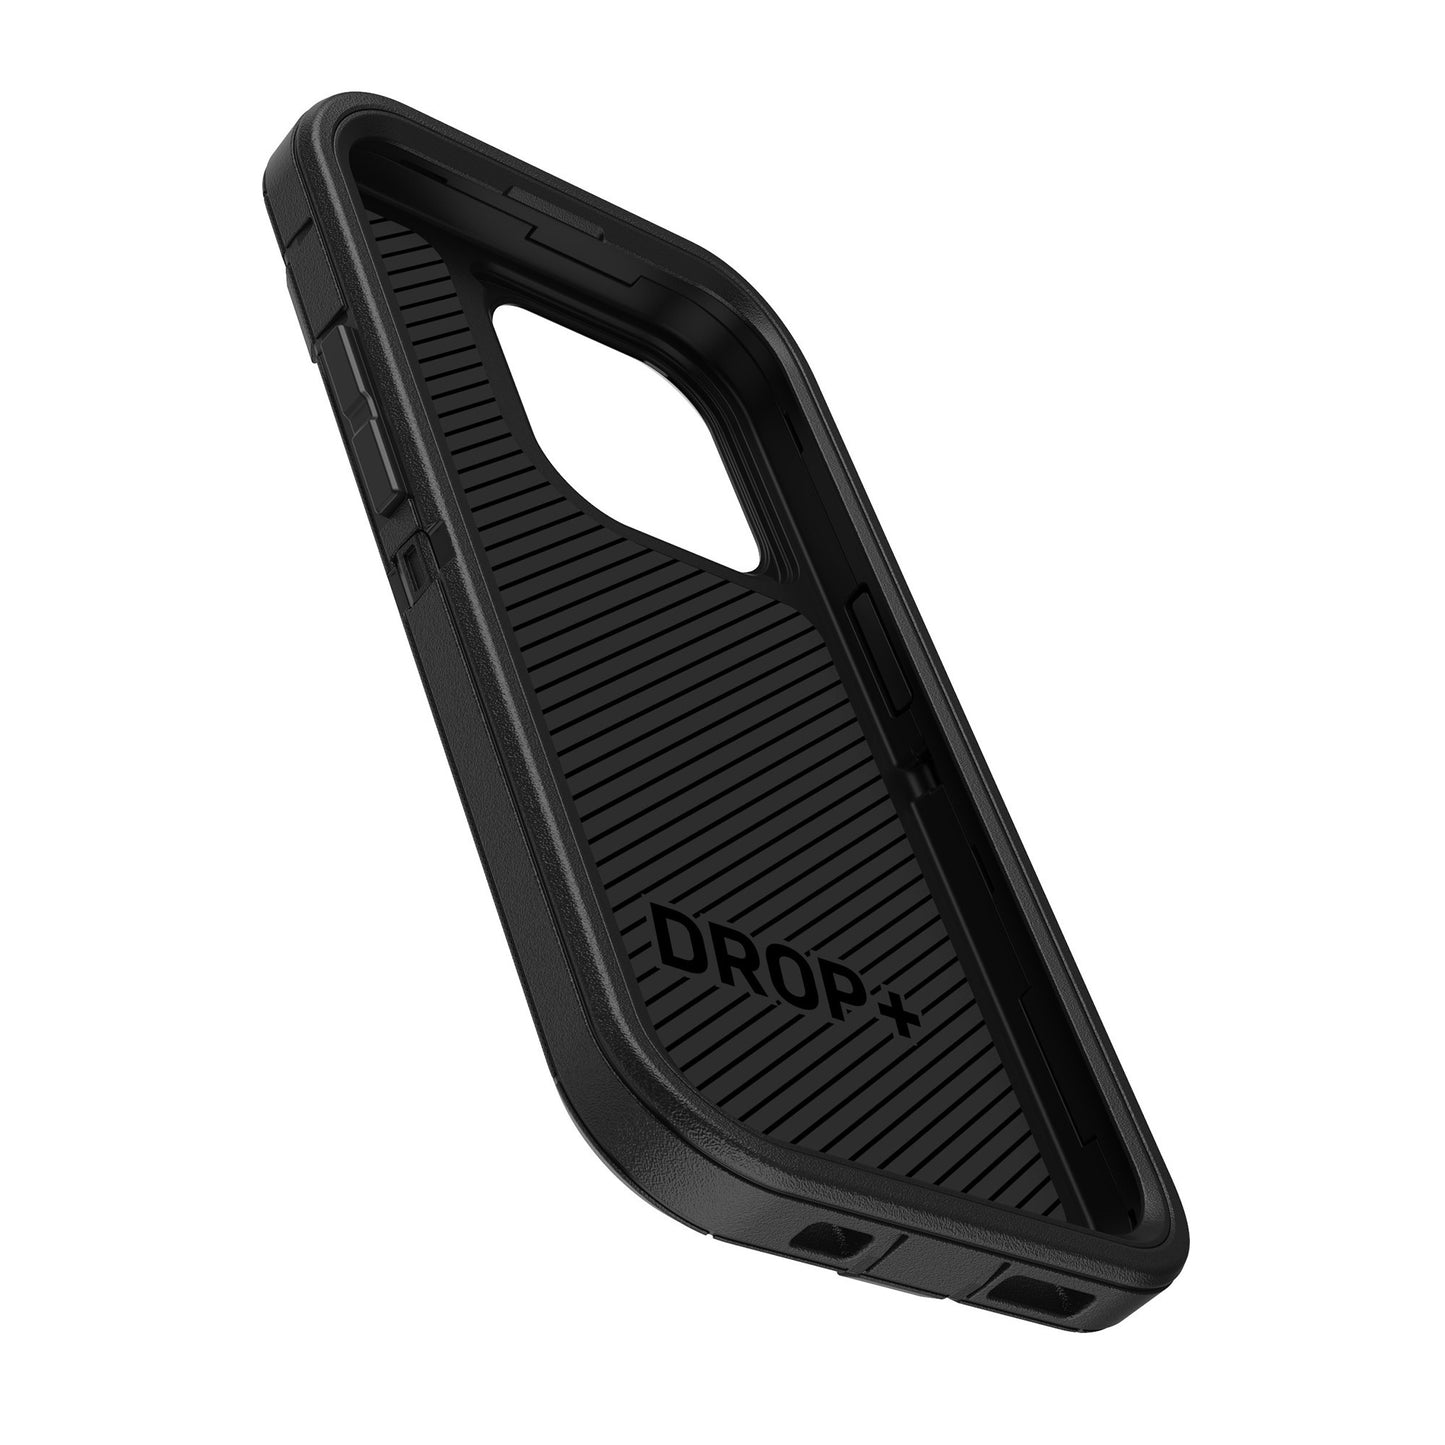 iPhone 14 Pro Otterbox Defender Series Case - Black - 15-10460